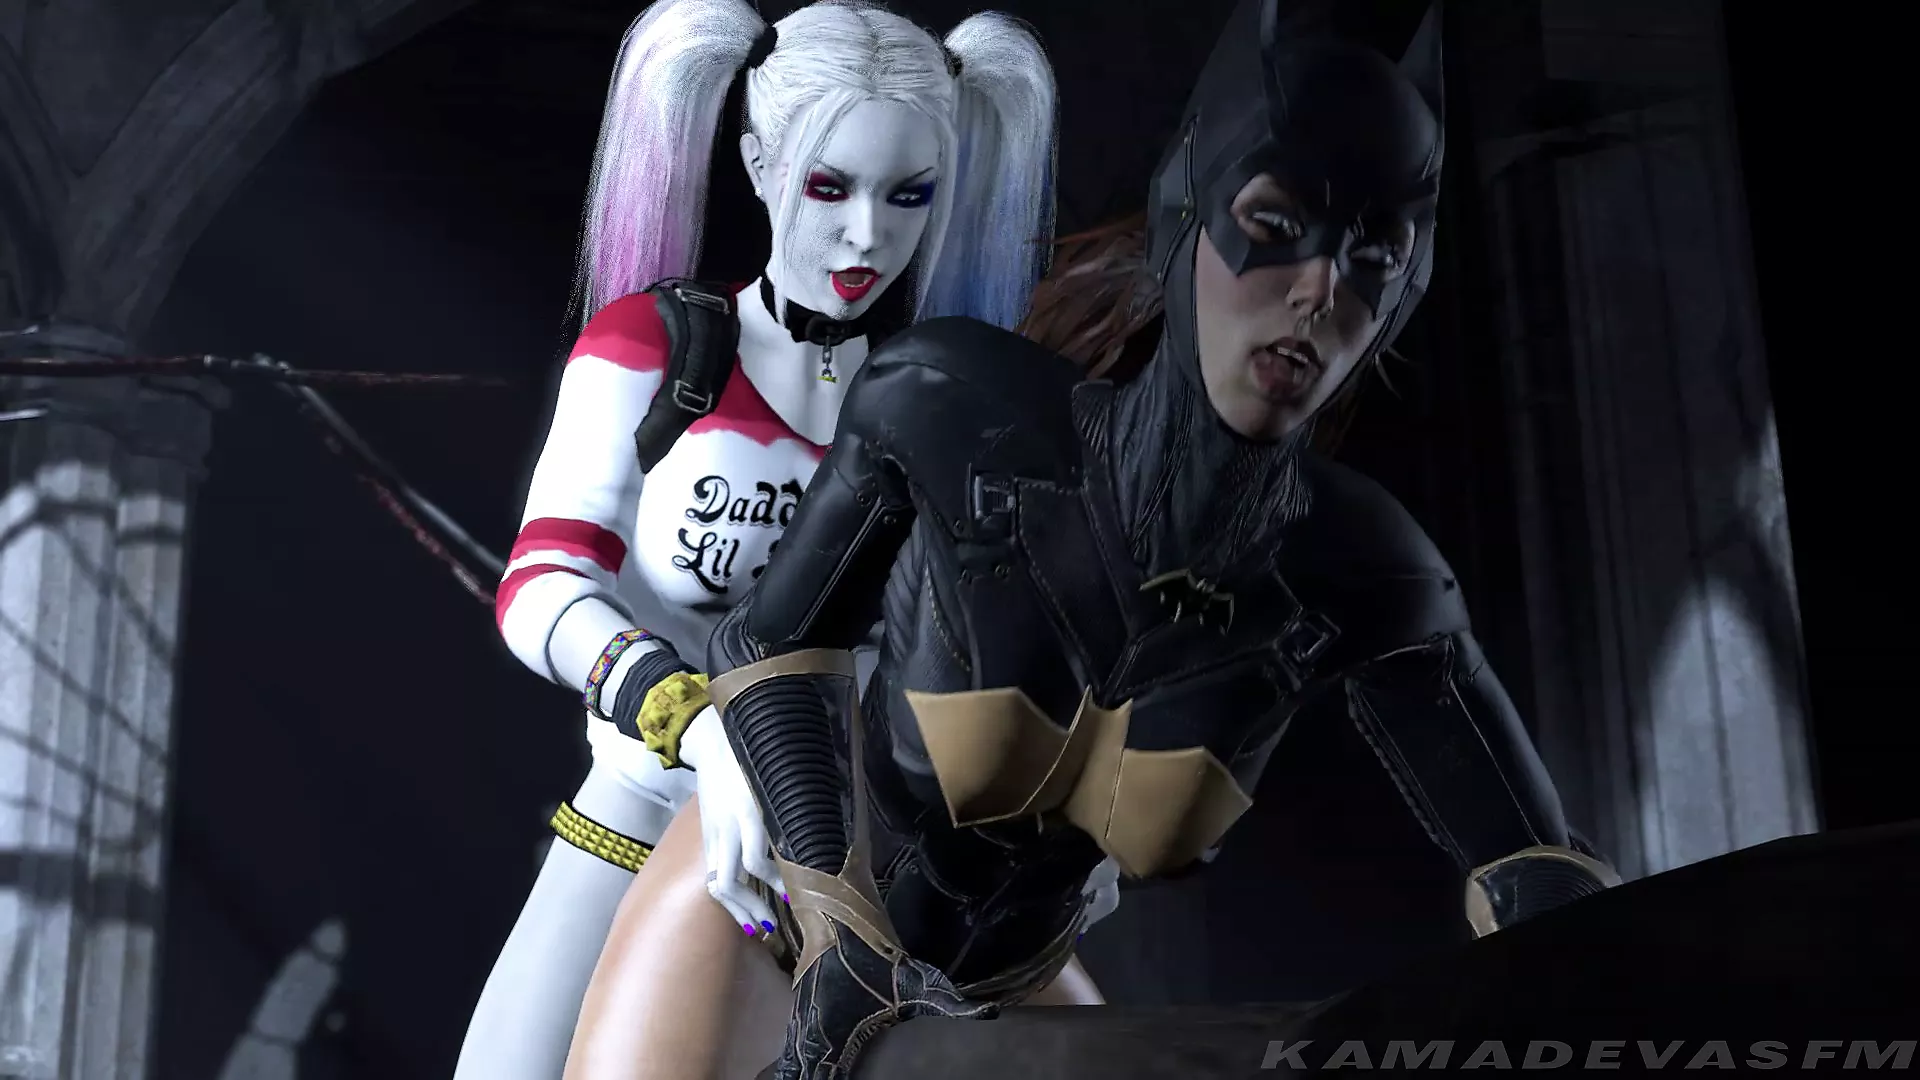 Batman Sex Videos - Harley Quinn Batman Porn Asylum - Episode 3 watch online or download